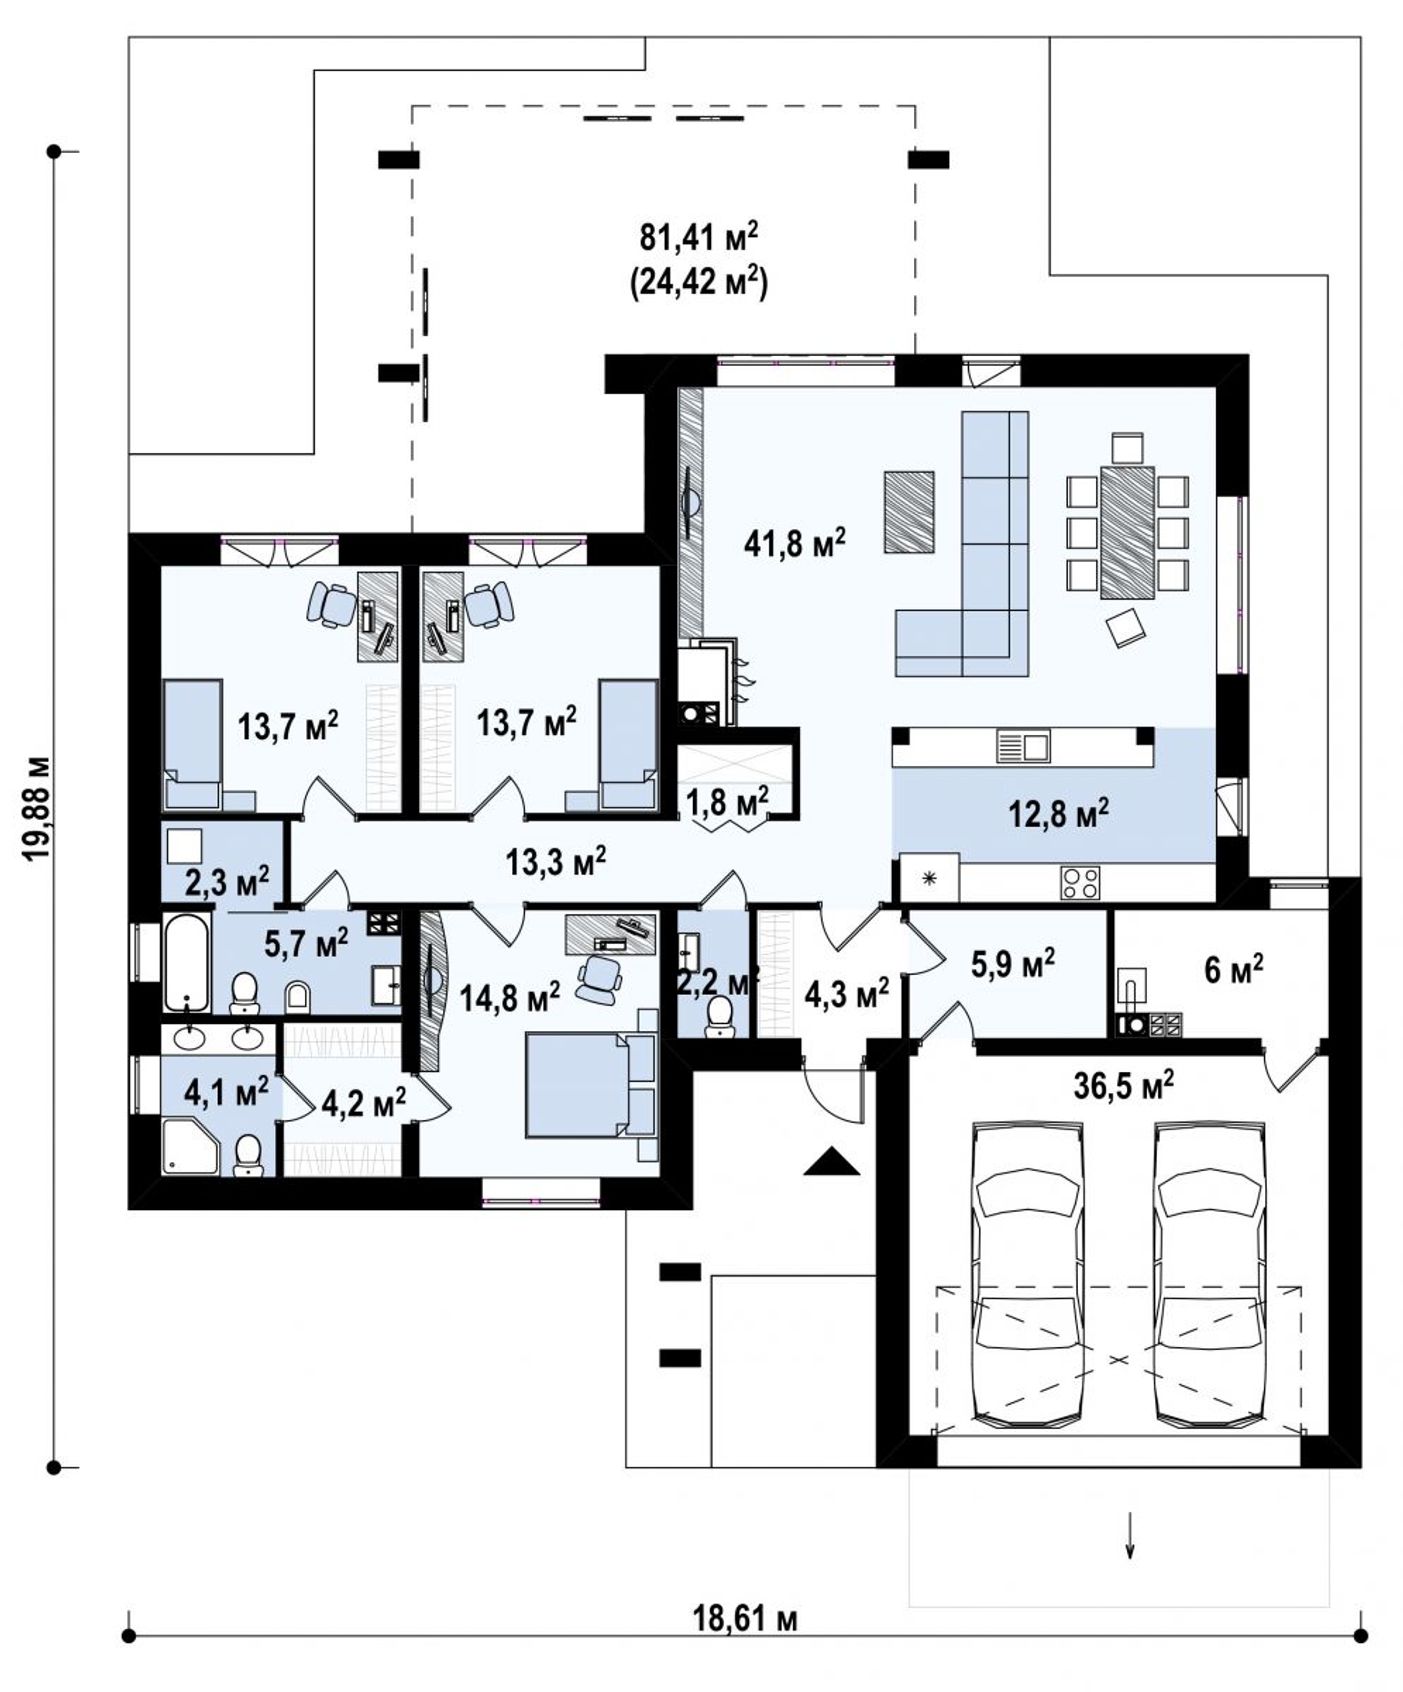 1-ый этаж - план проекта Zx78